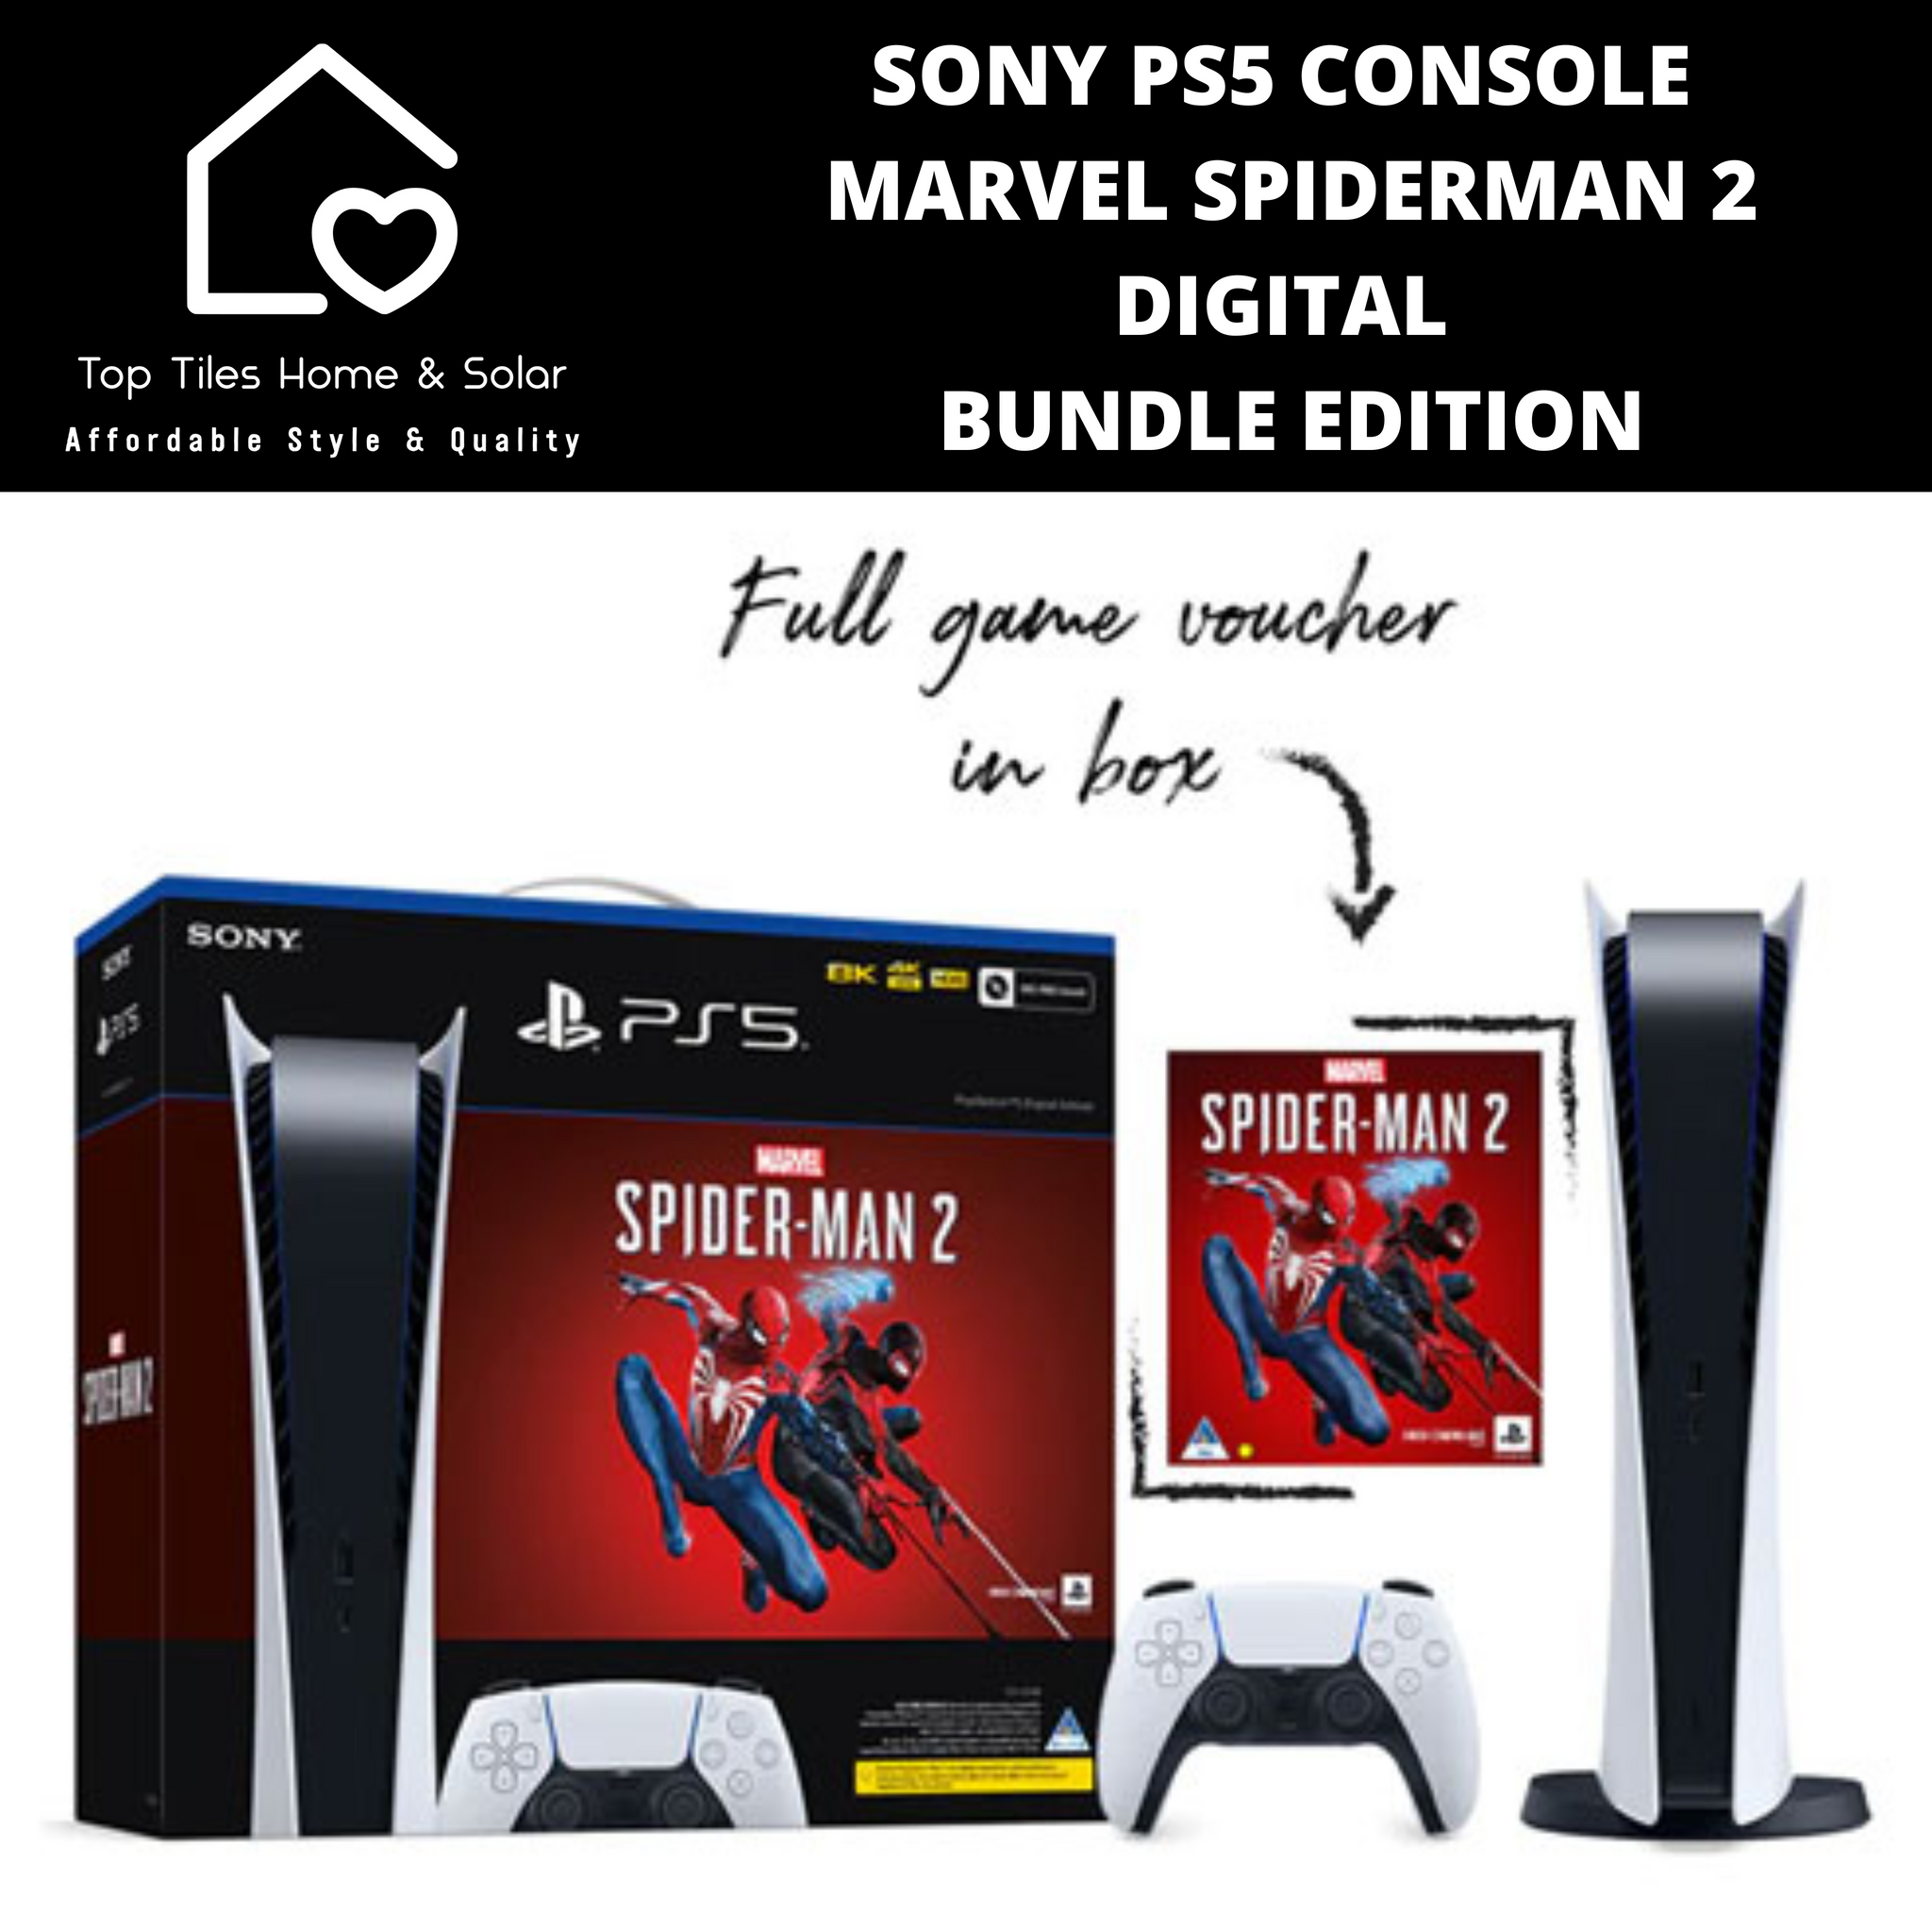 Sony PS5 Console Marvel Spiderman 2 Digital Bundle Edition – Top